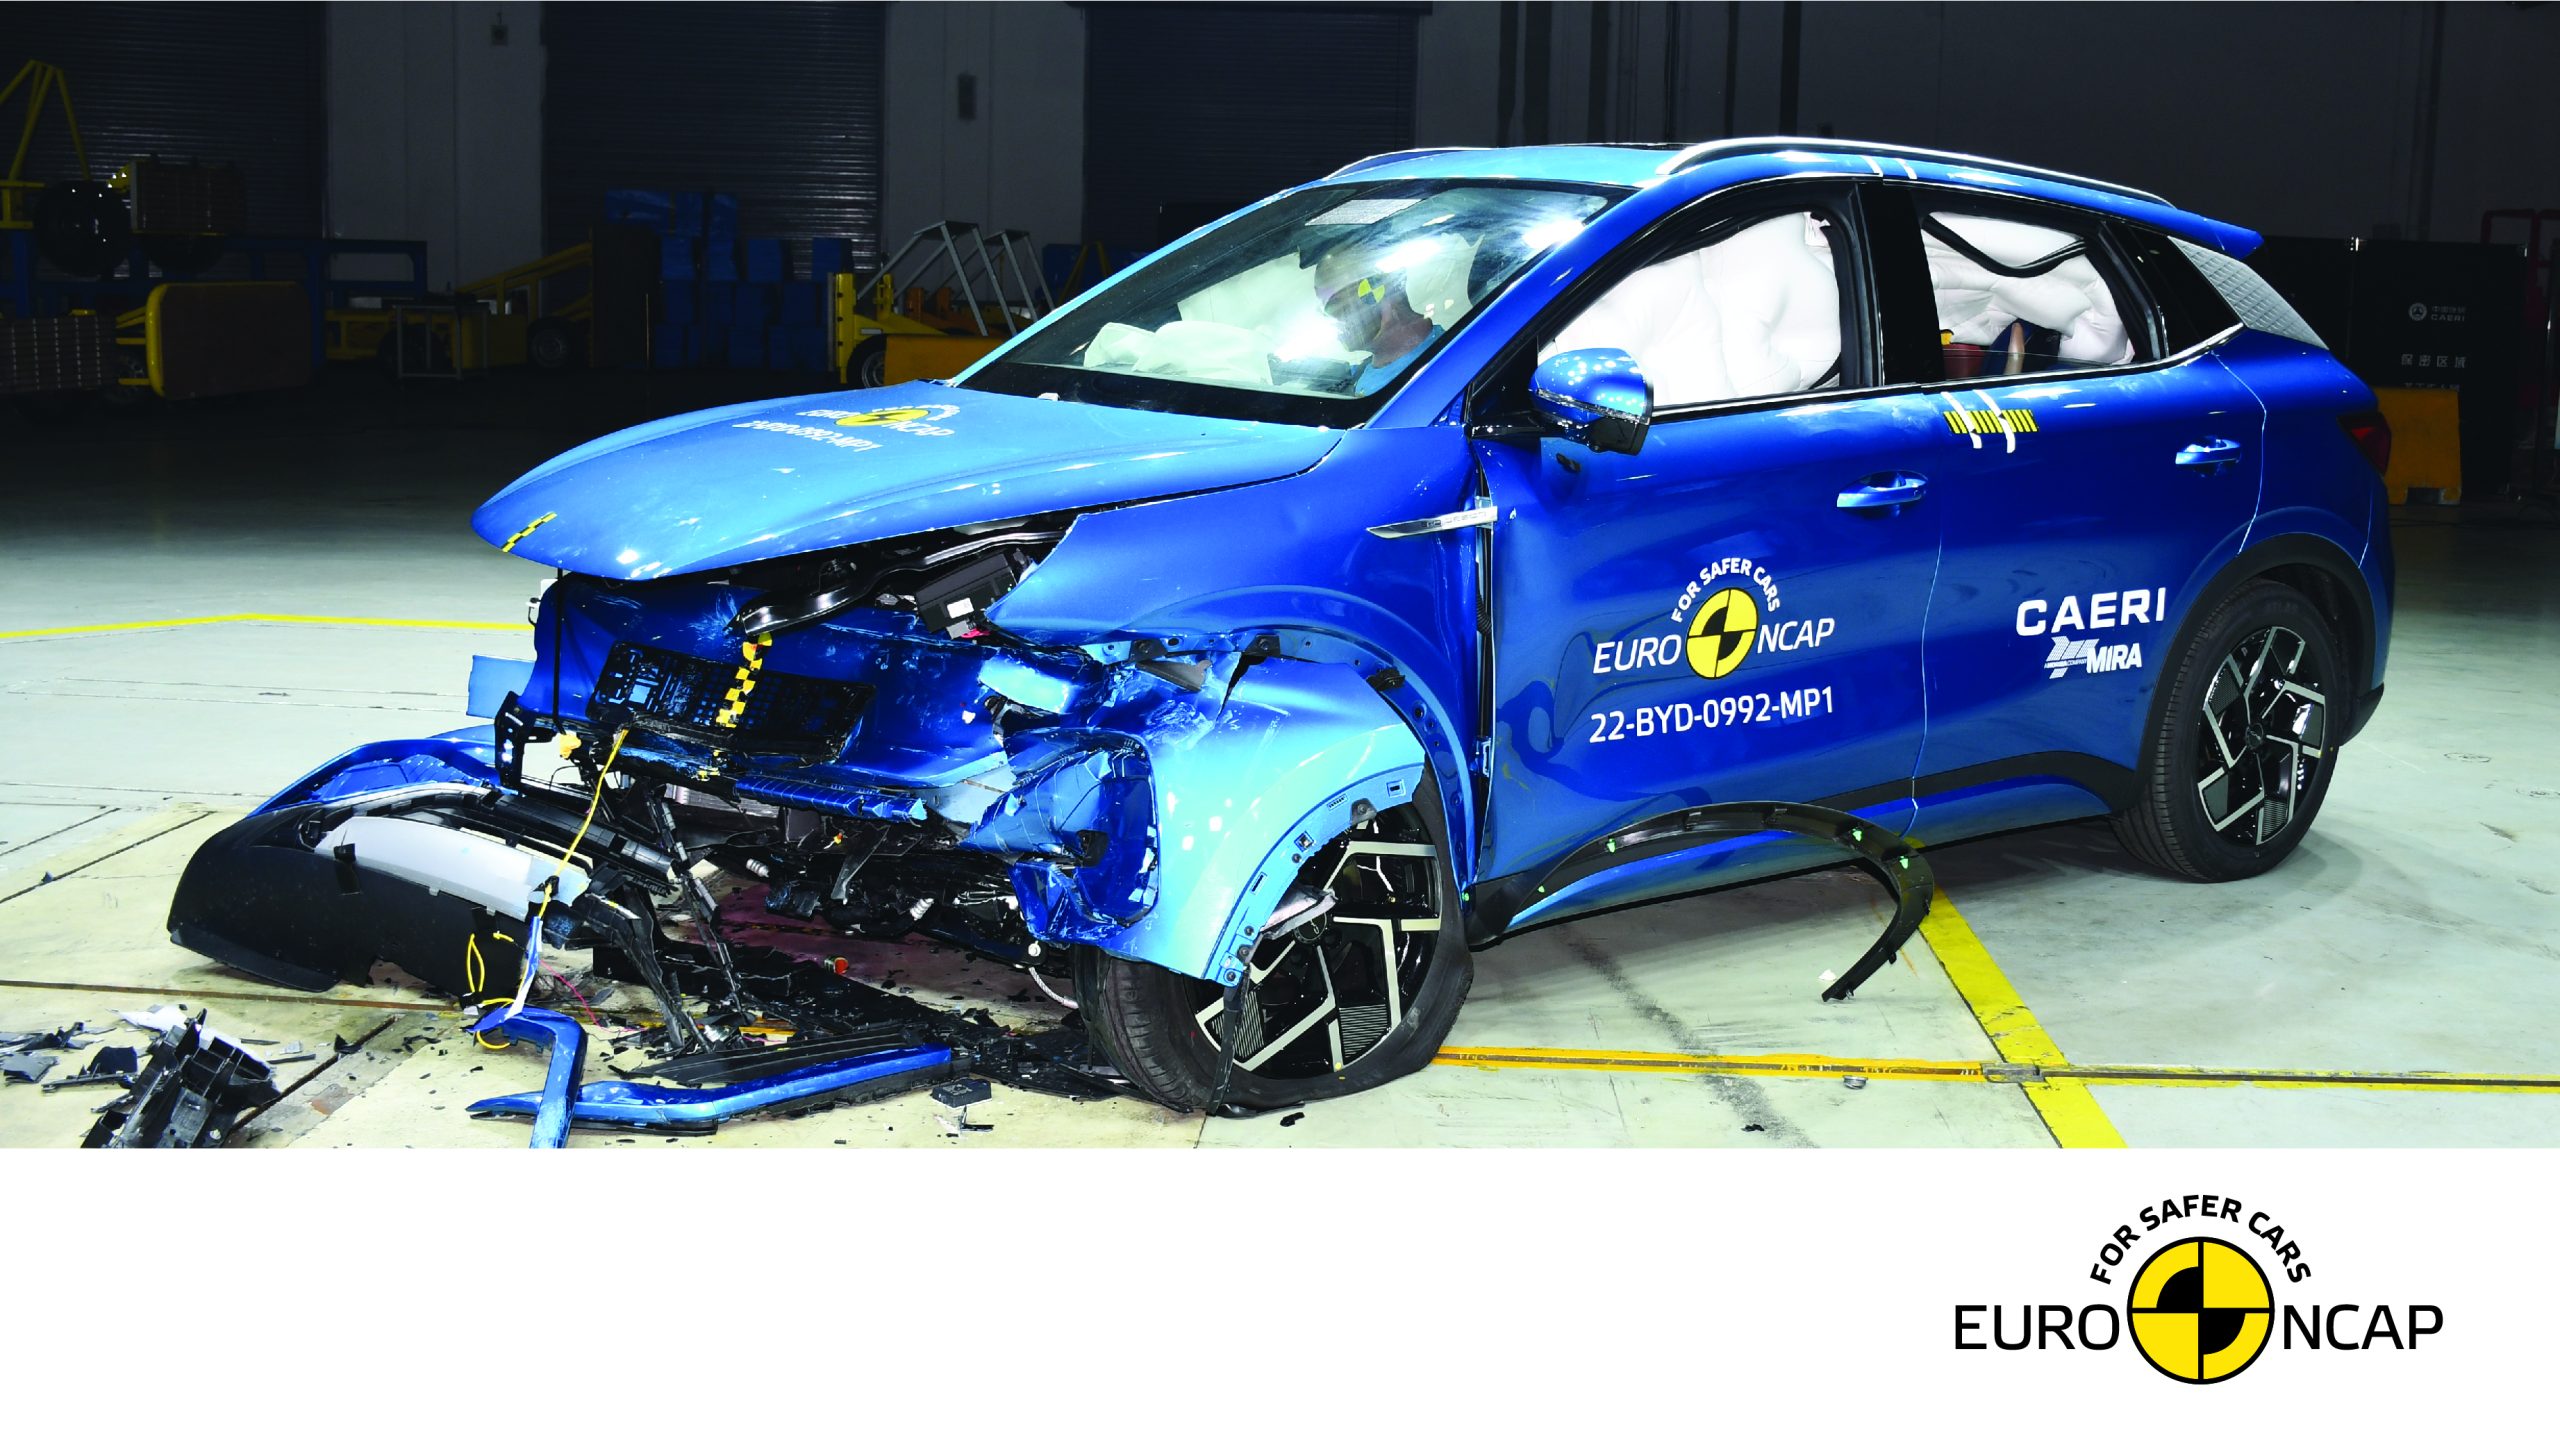 Euro NCAP, Euroncap, European New Car Assessment Programme, car safety ratings, car star rating, safety assessment for cars, crash test dummy,  crash test dummies